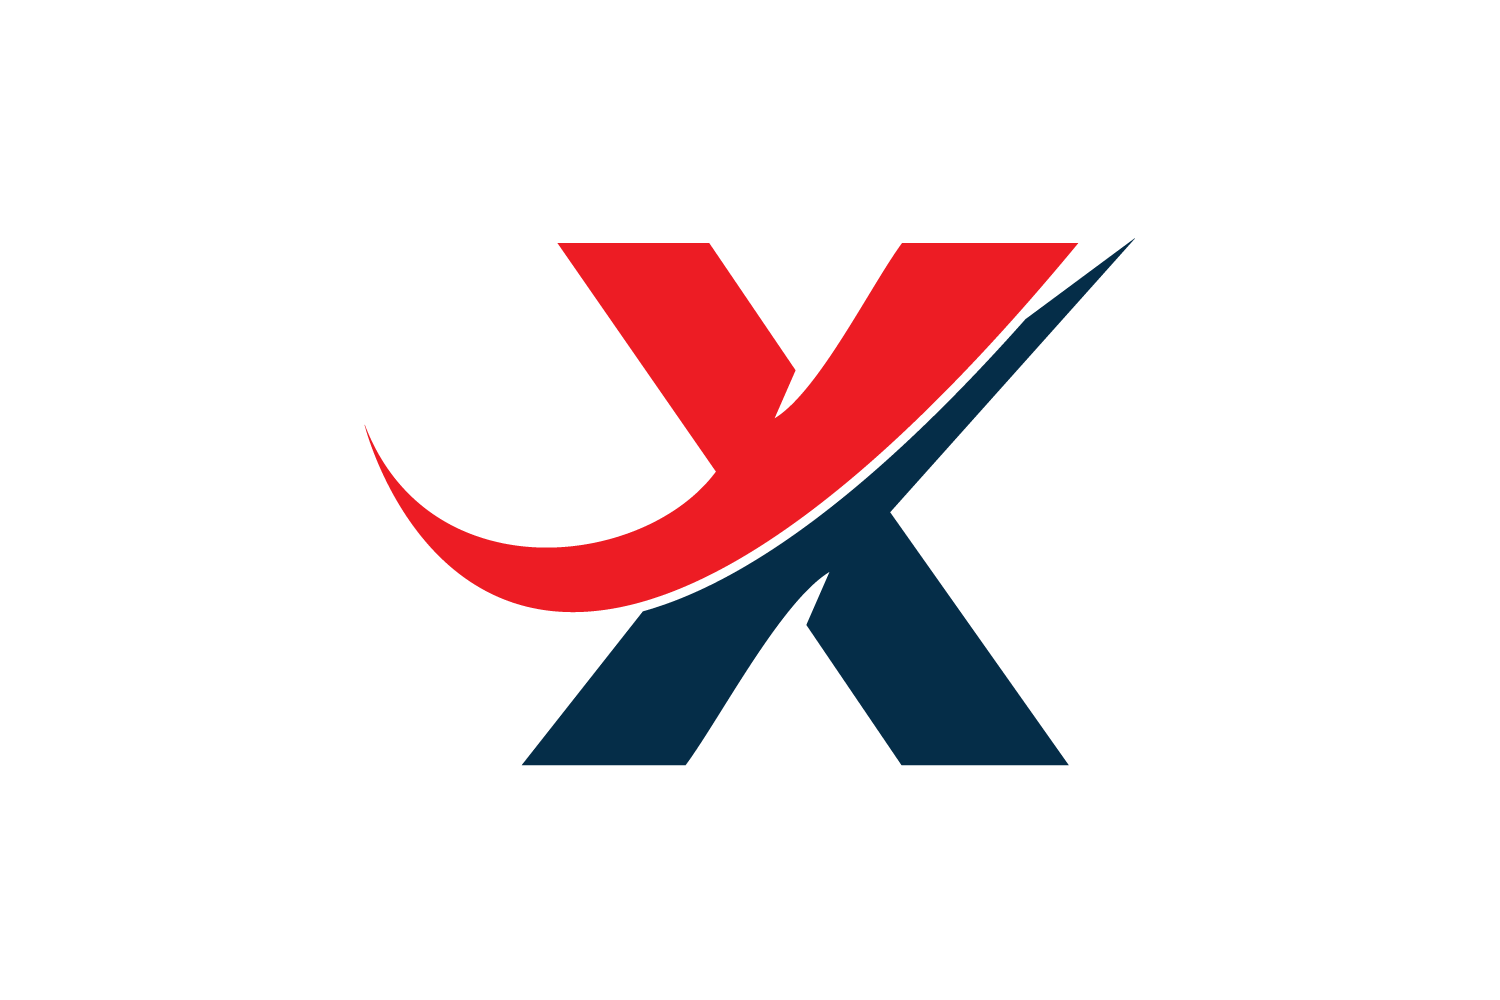 X logo png. Логотип x. Логотип с буквой x. Красивая буква x. Дизайн буквы x.